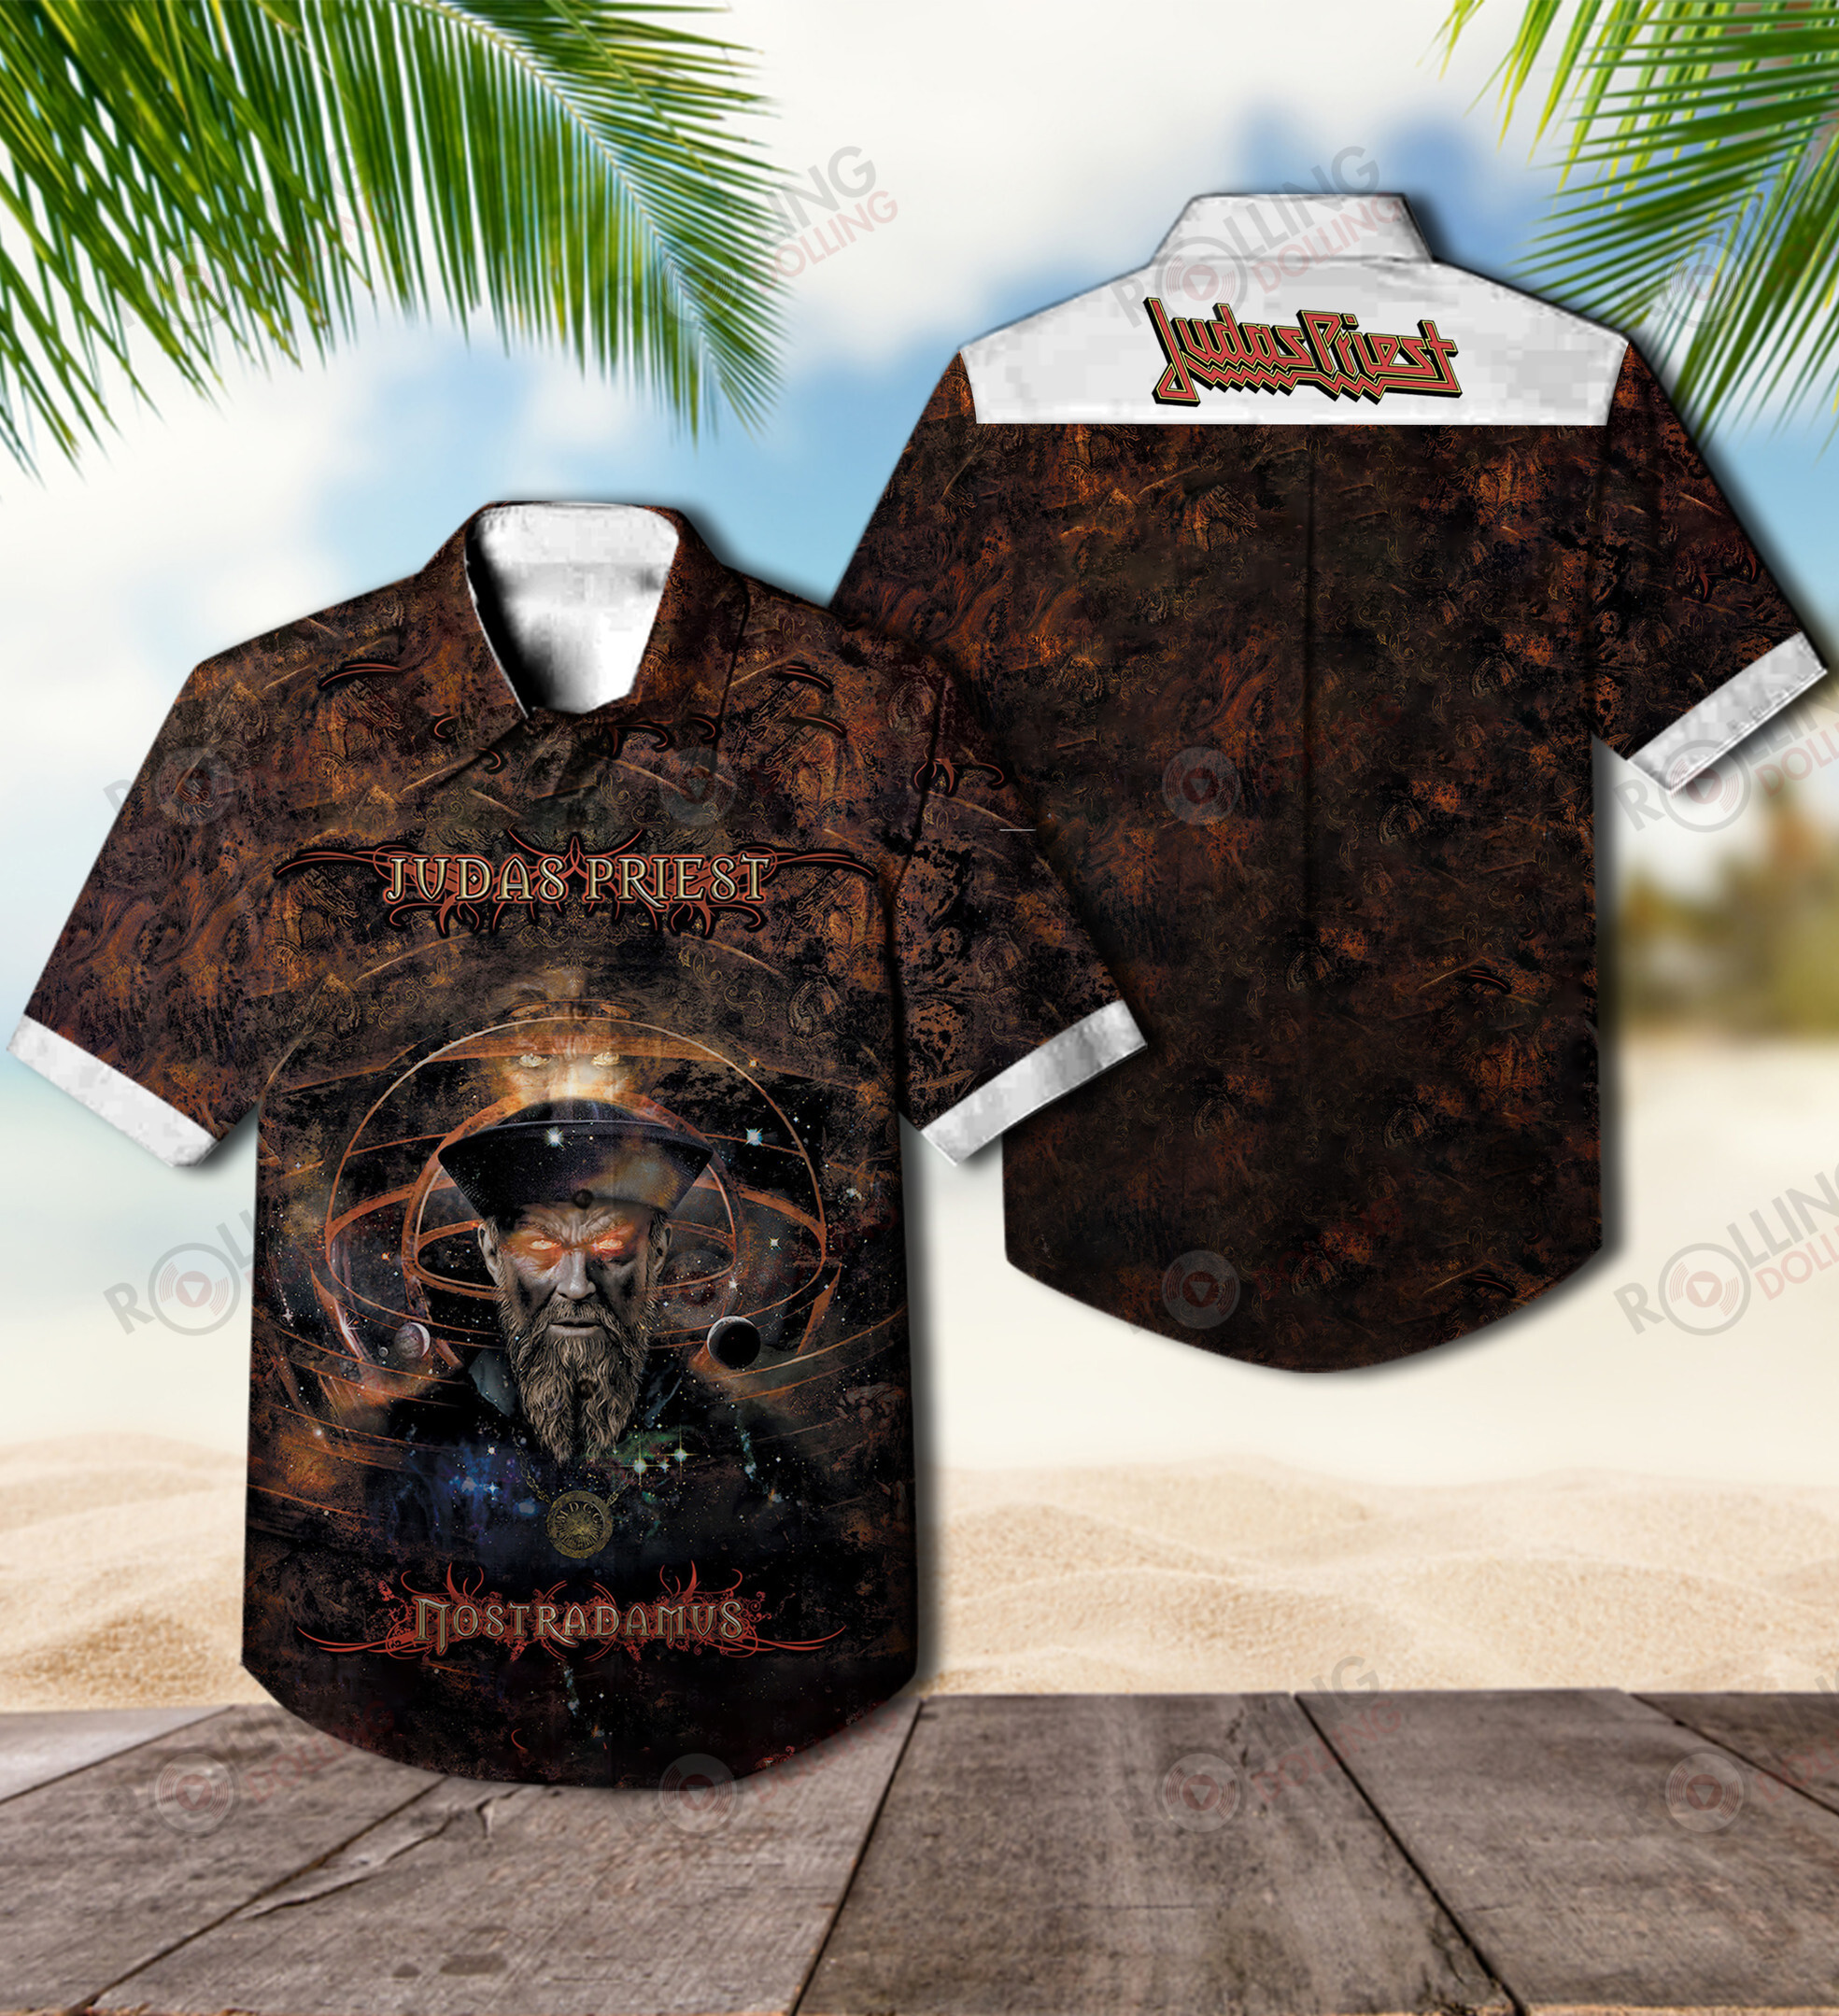 Regardless of their style, you will feel comfortable wearing Hawaiian Shirt 7